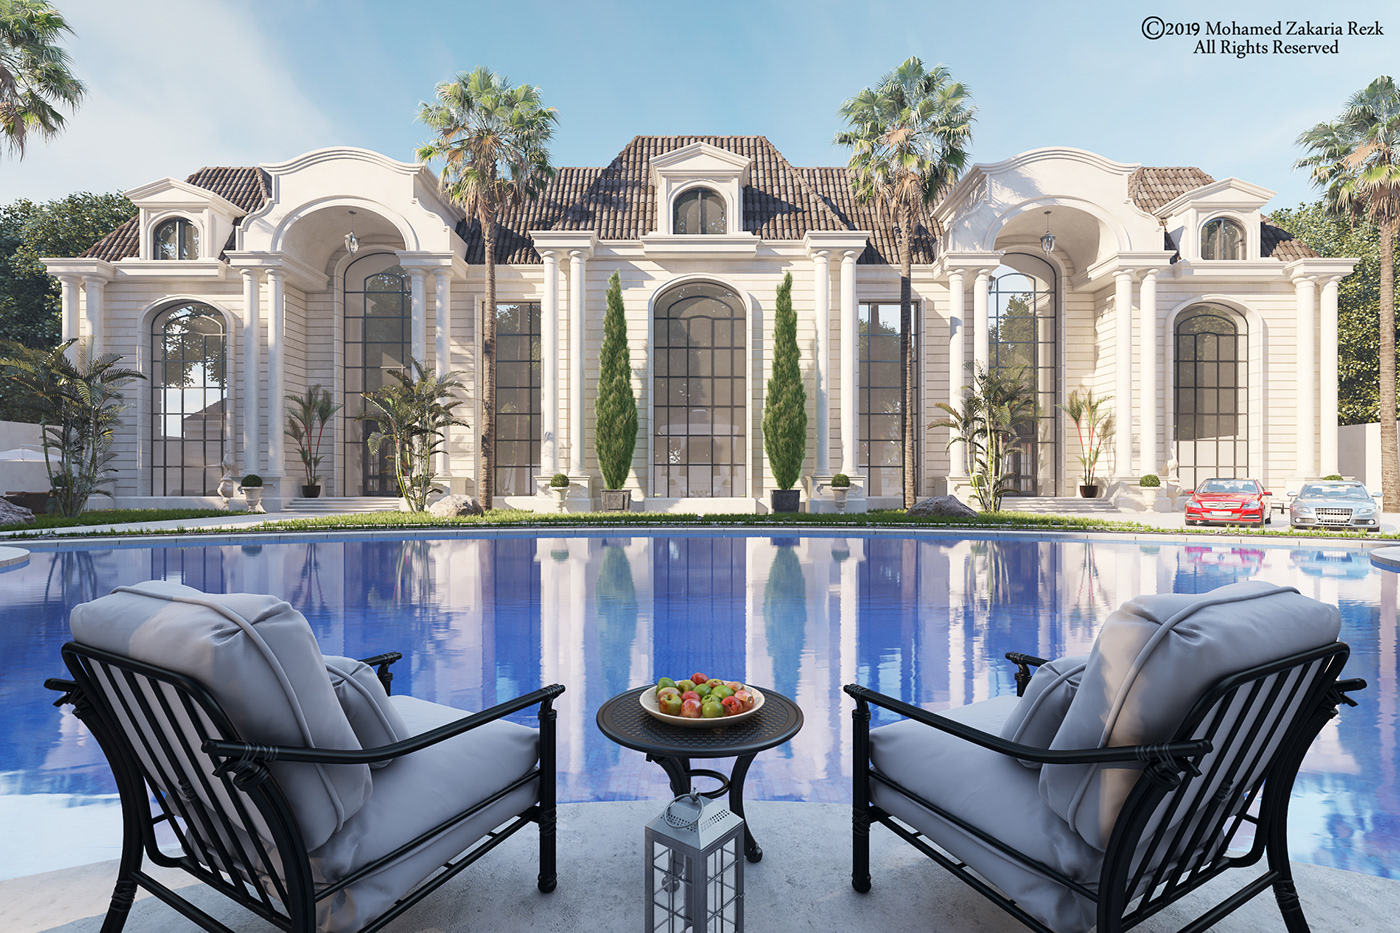 3dsmax vray photoshop Luxury House in riyadh lighting exterior Classic design luxury